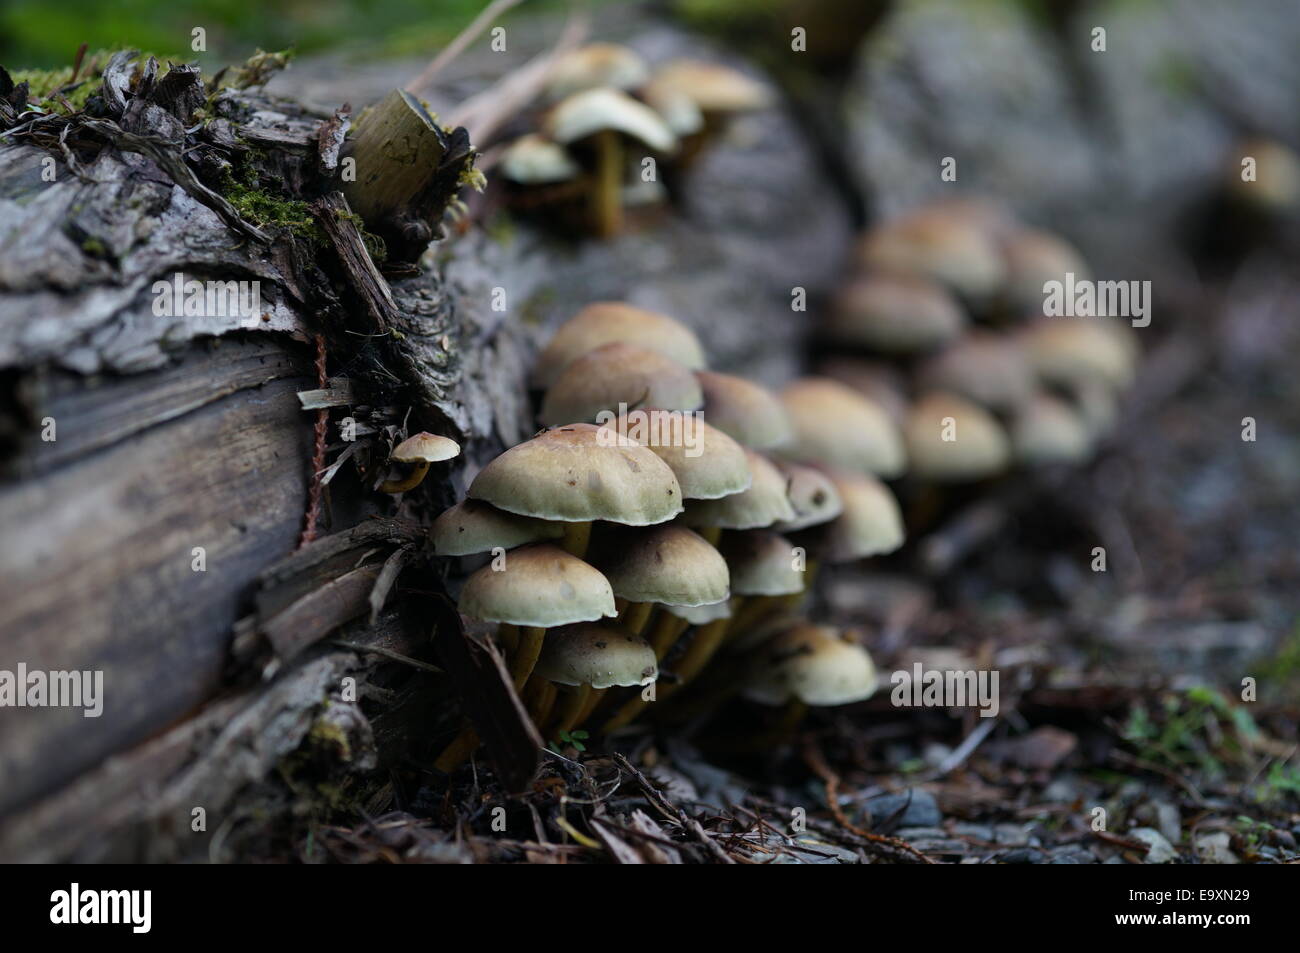 https://c8.alamy.com/comp/E9XN29/wild-mushrooms-on-tree-bark-E9XN29.jpg